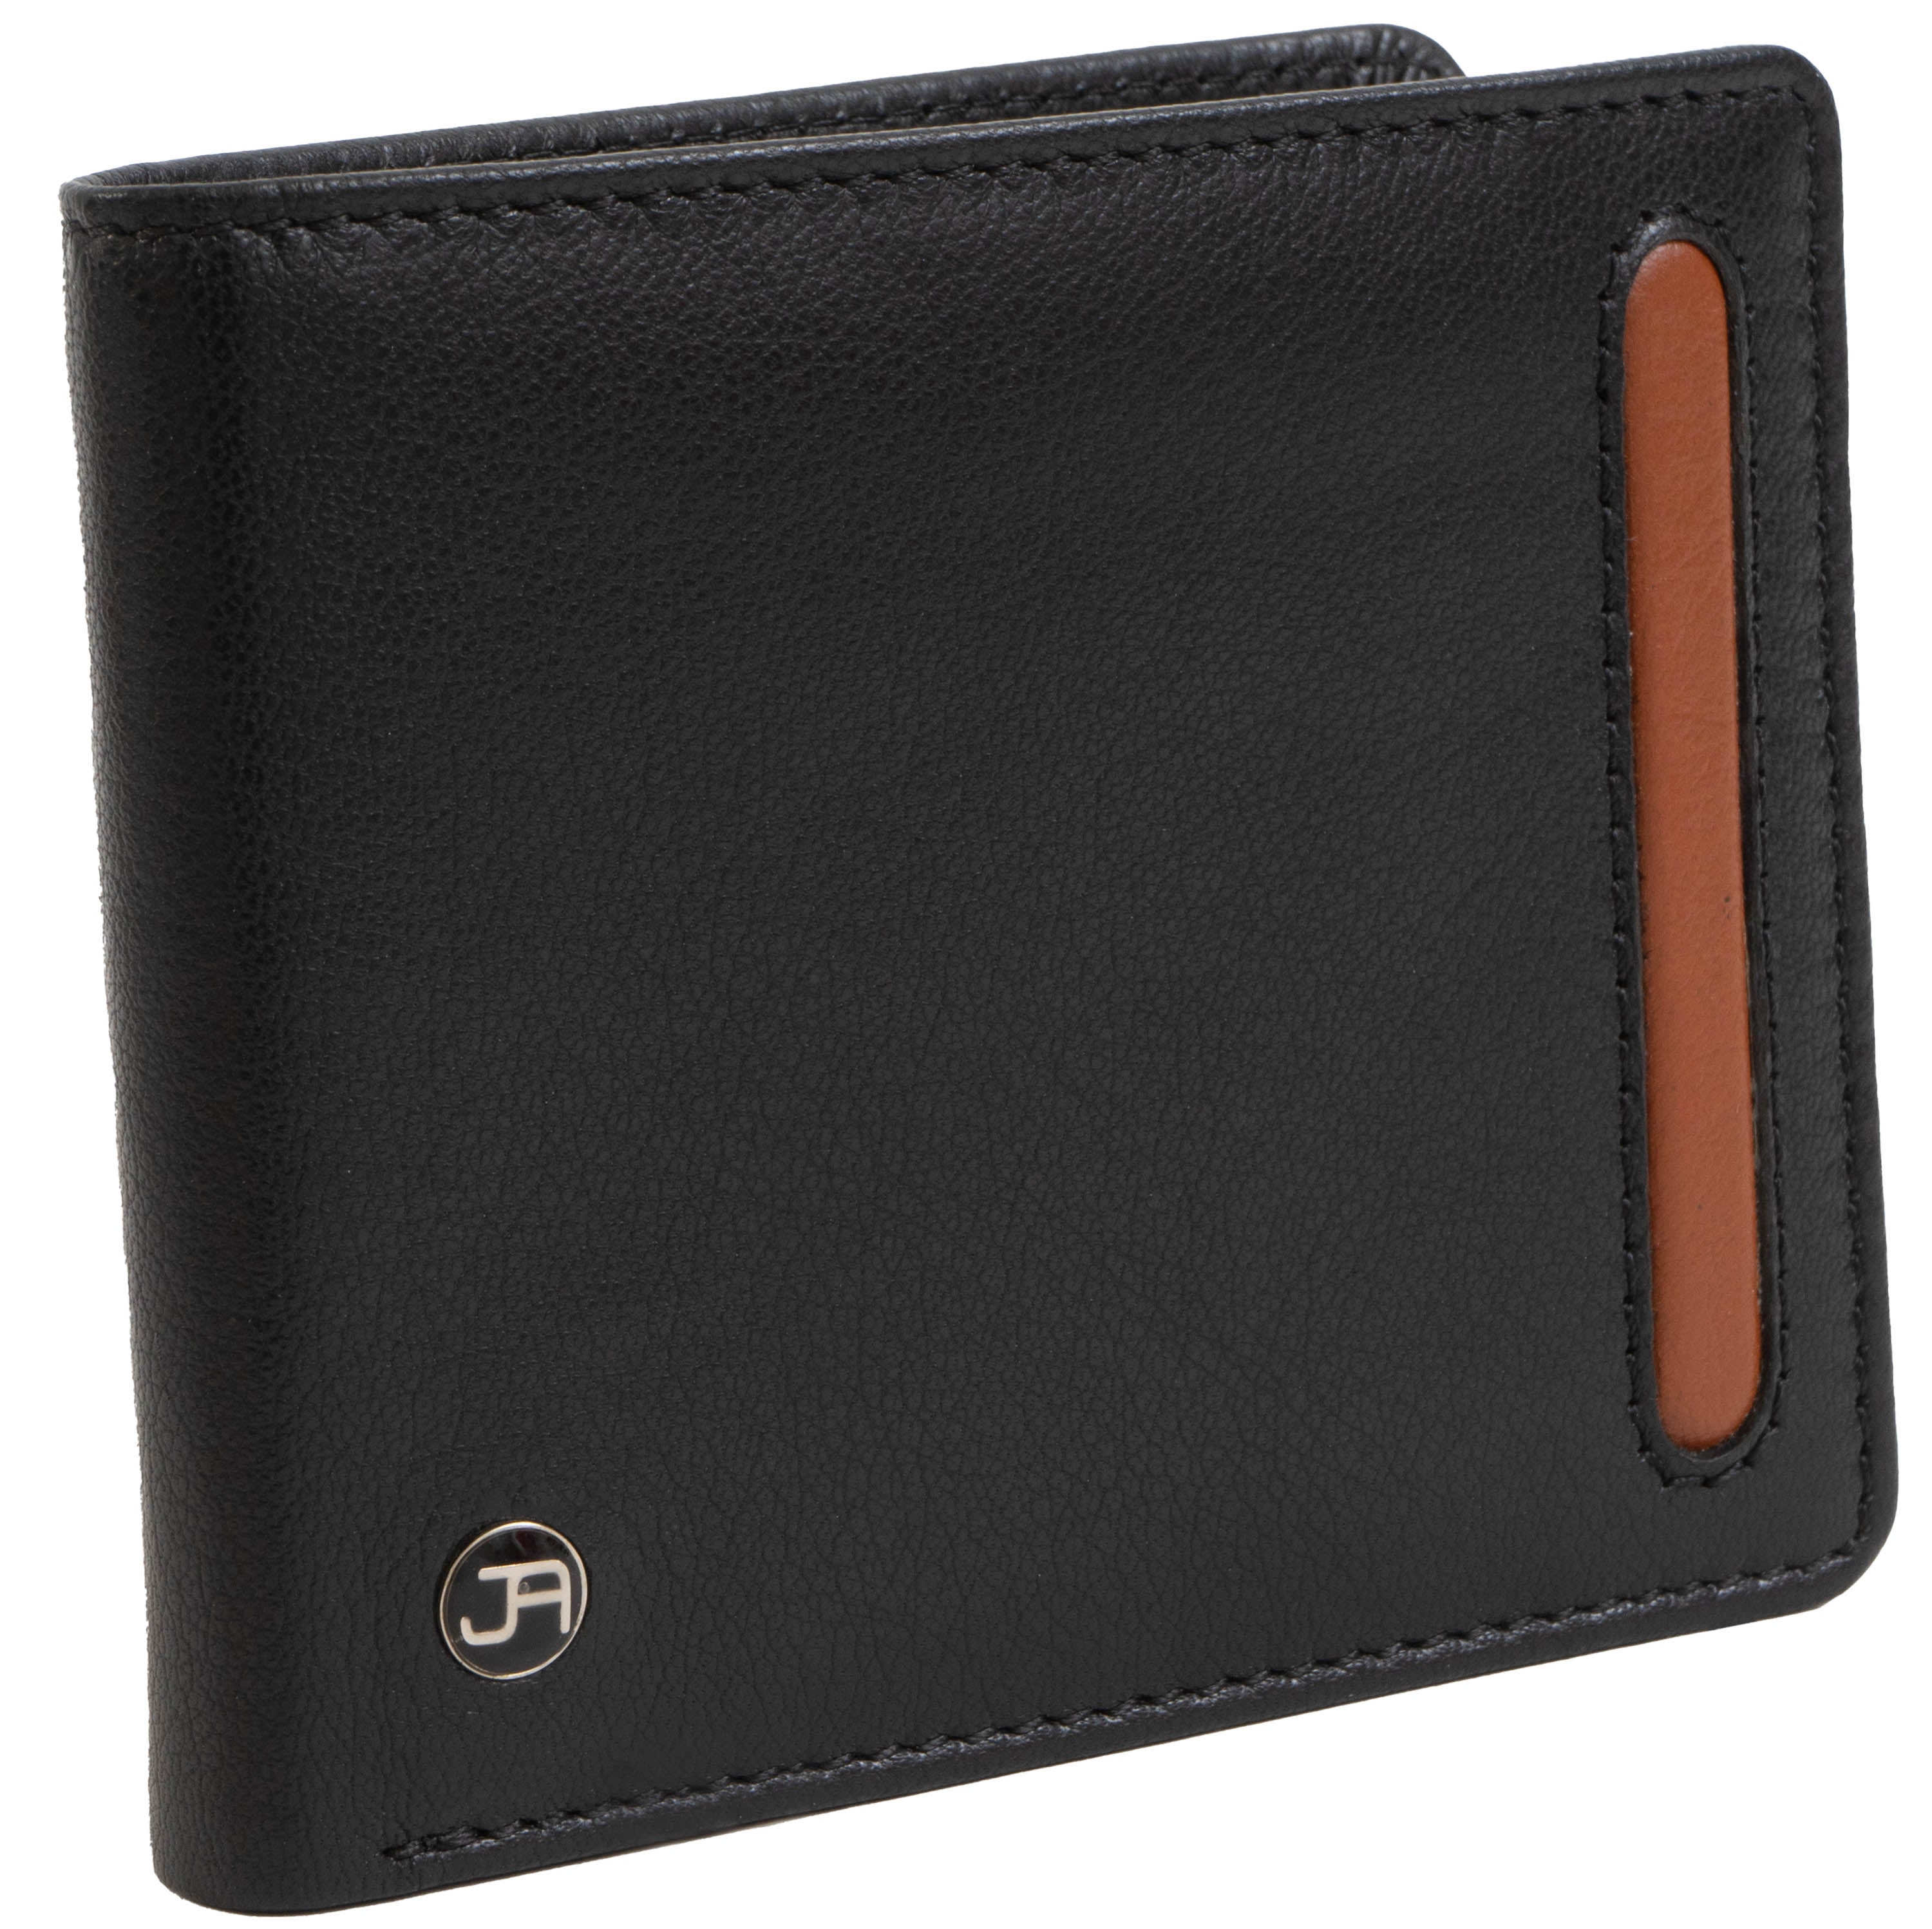 title:Jack Abrahams Bi-Fold RFID Wallet With Flip ID Window Pocket;color:Black/Cognac